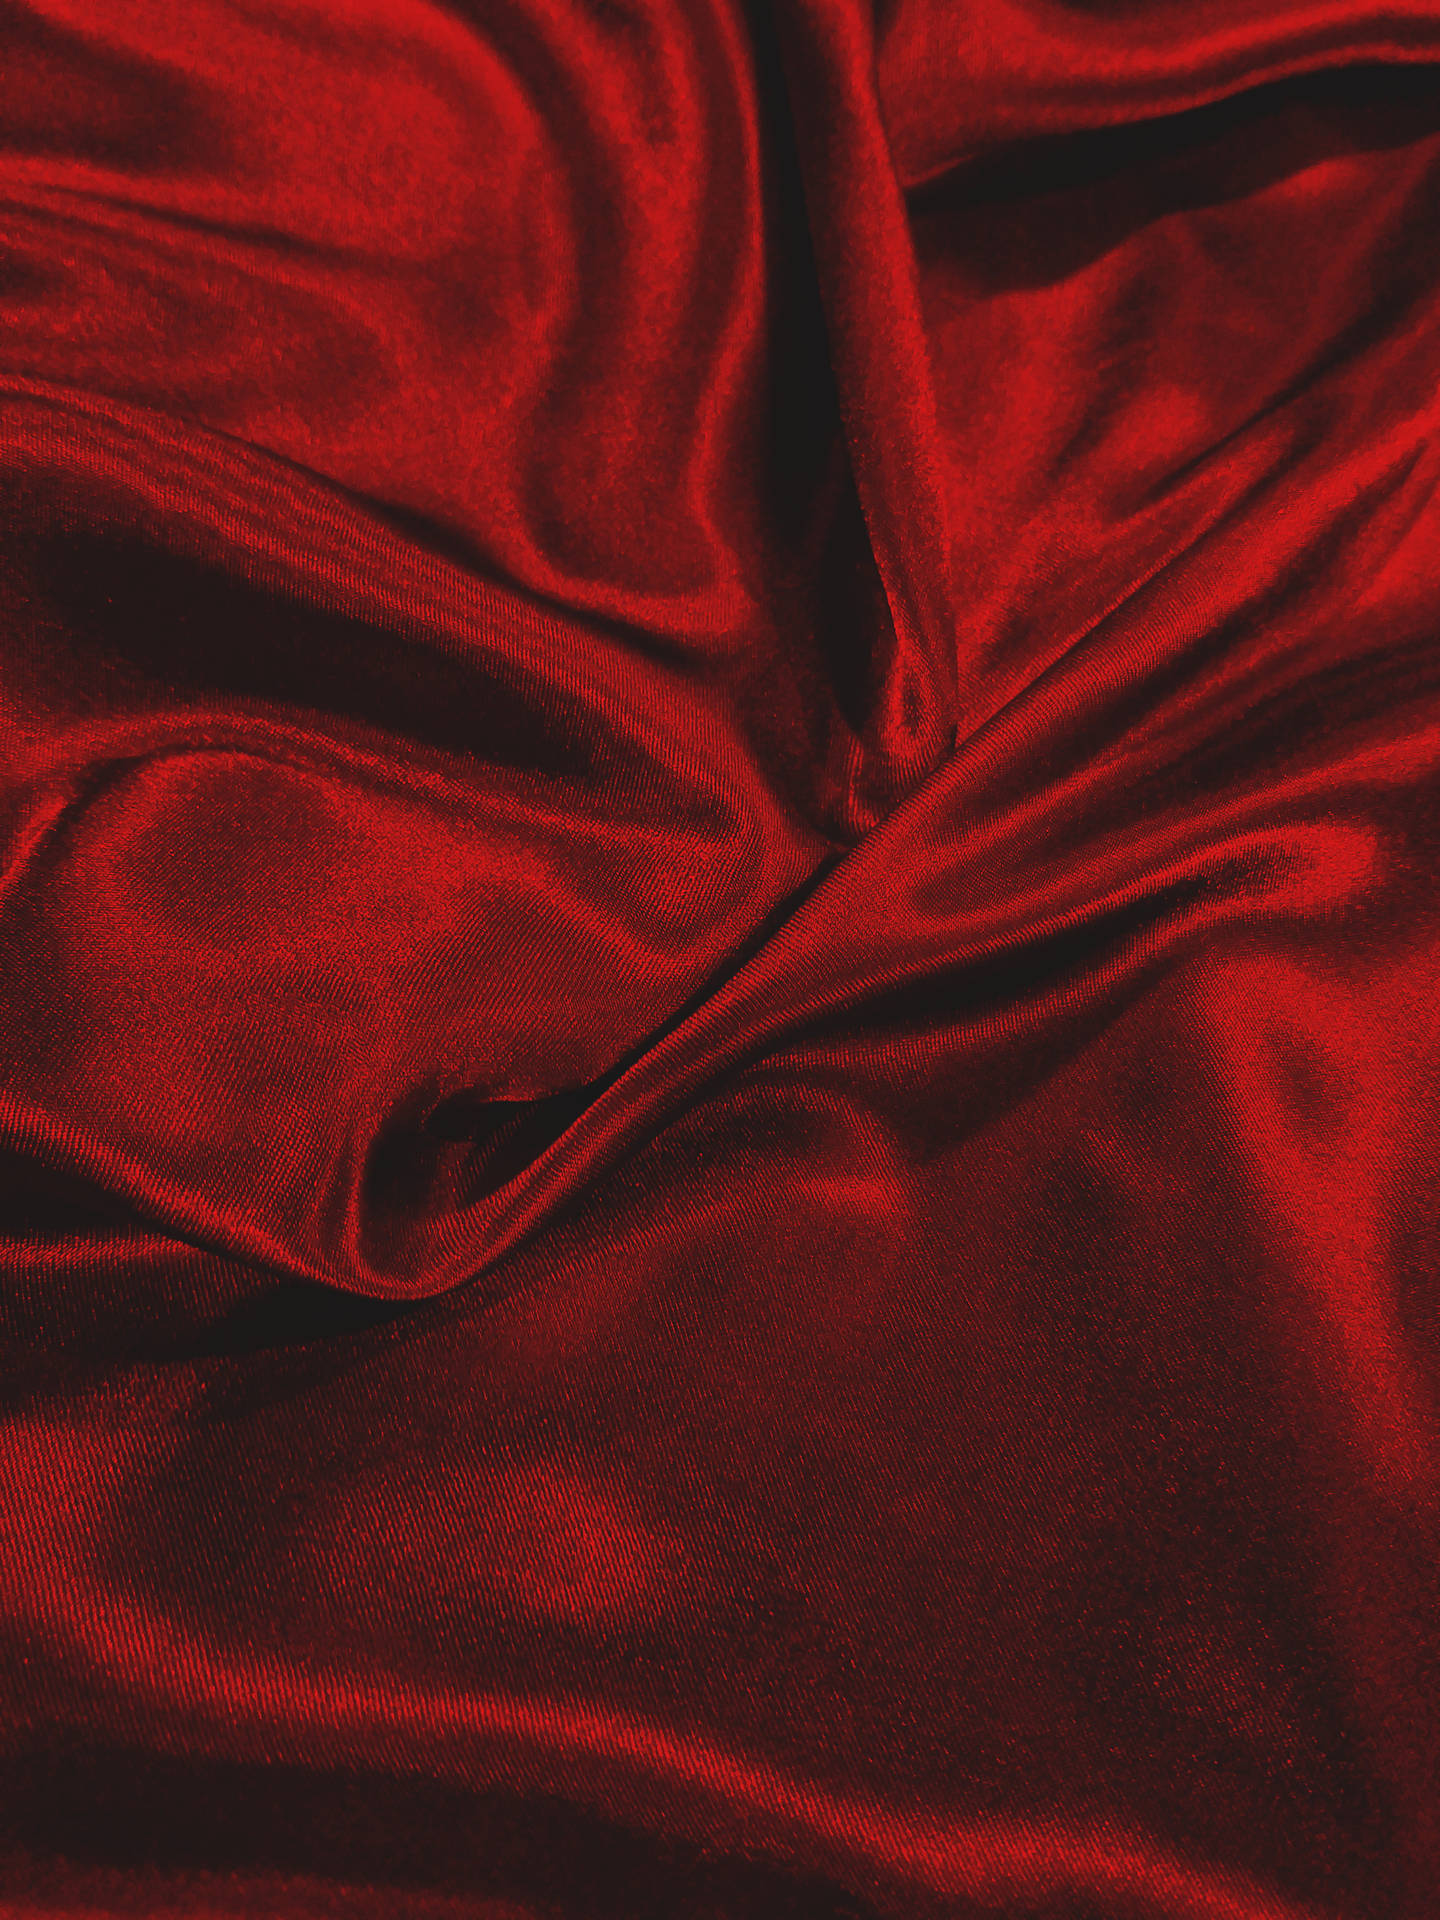 Red Satin Silky Texture Wallpaper